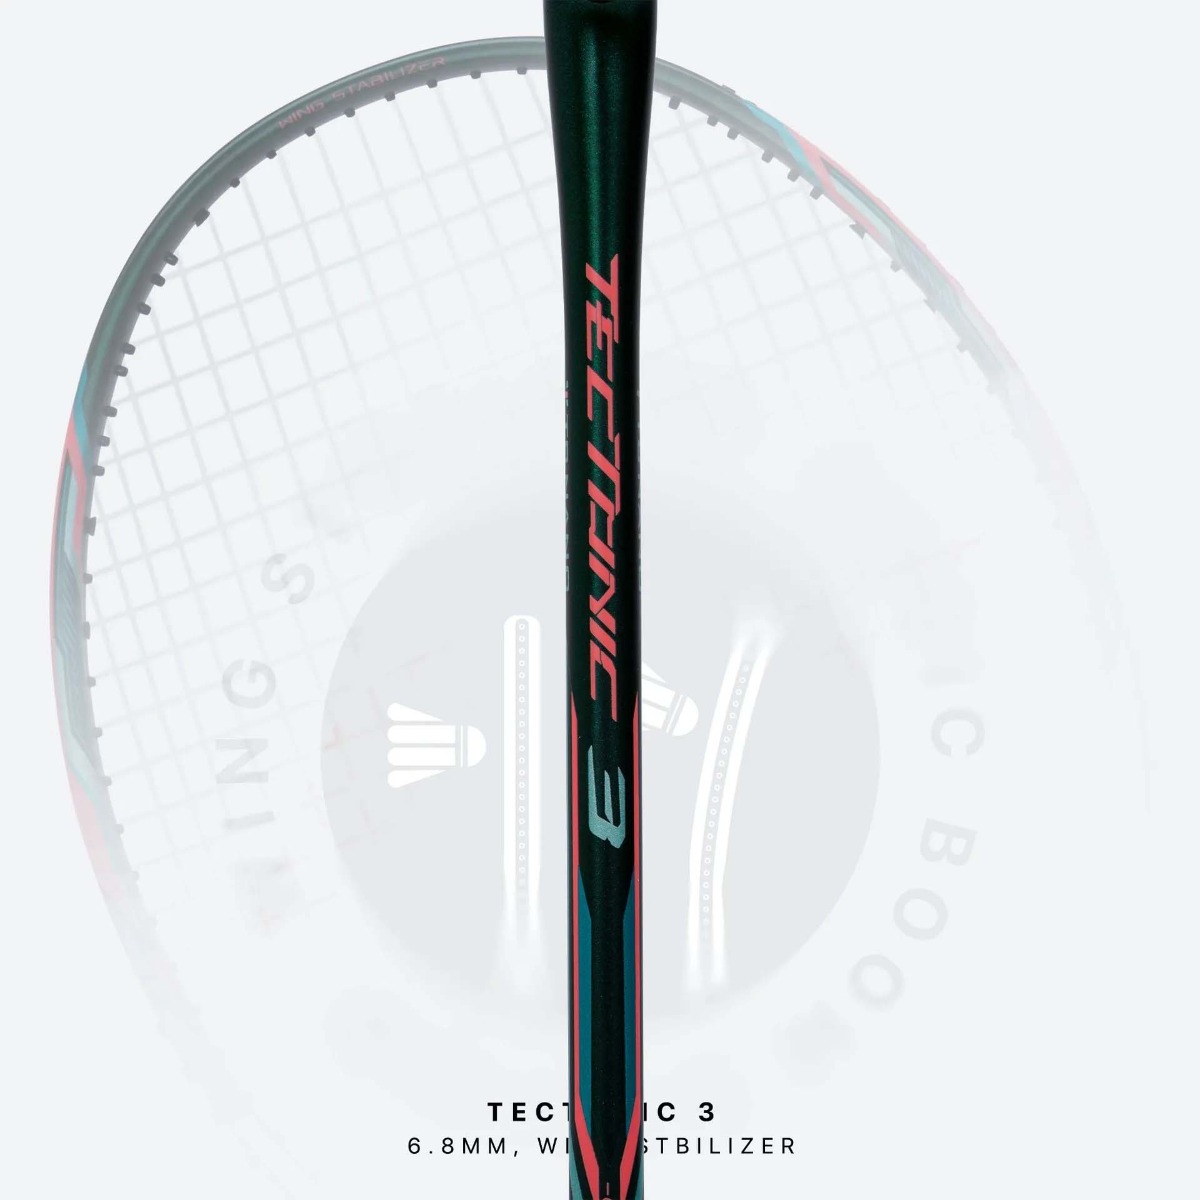 Li-Ning Tectonic 3 Badminton Racket Features Sonic Boom System